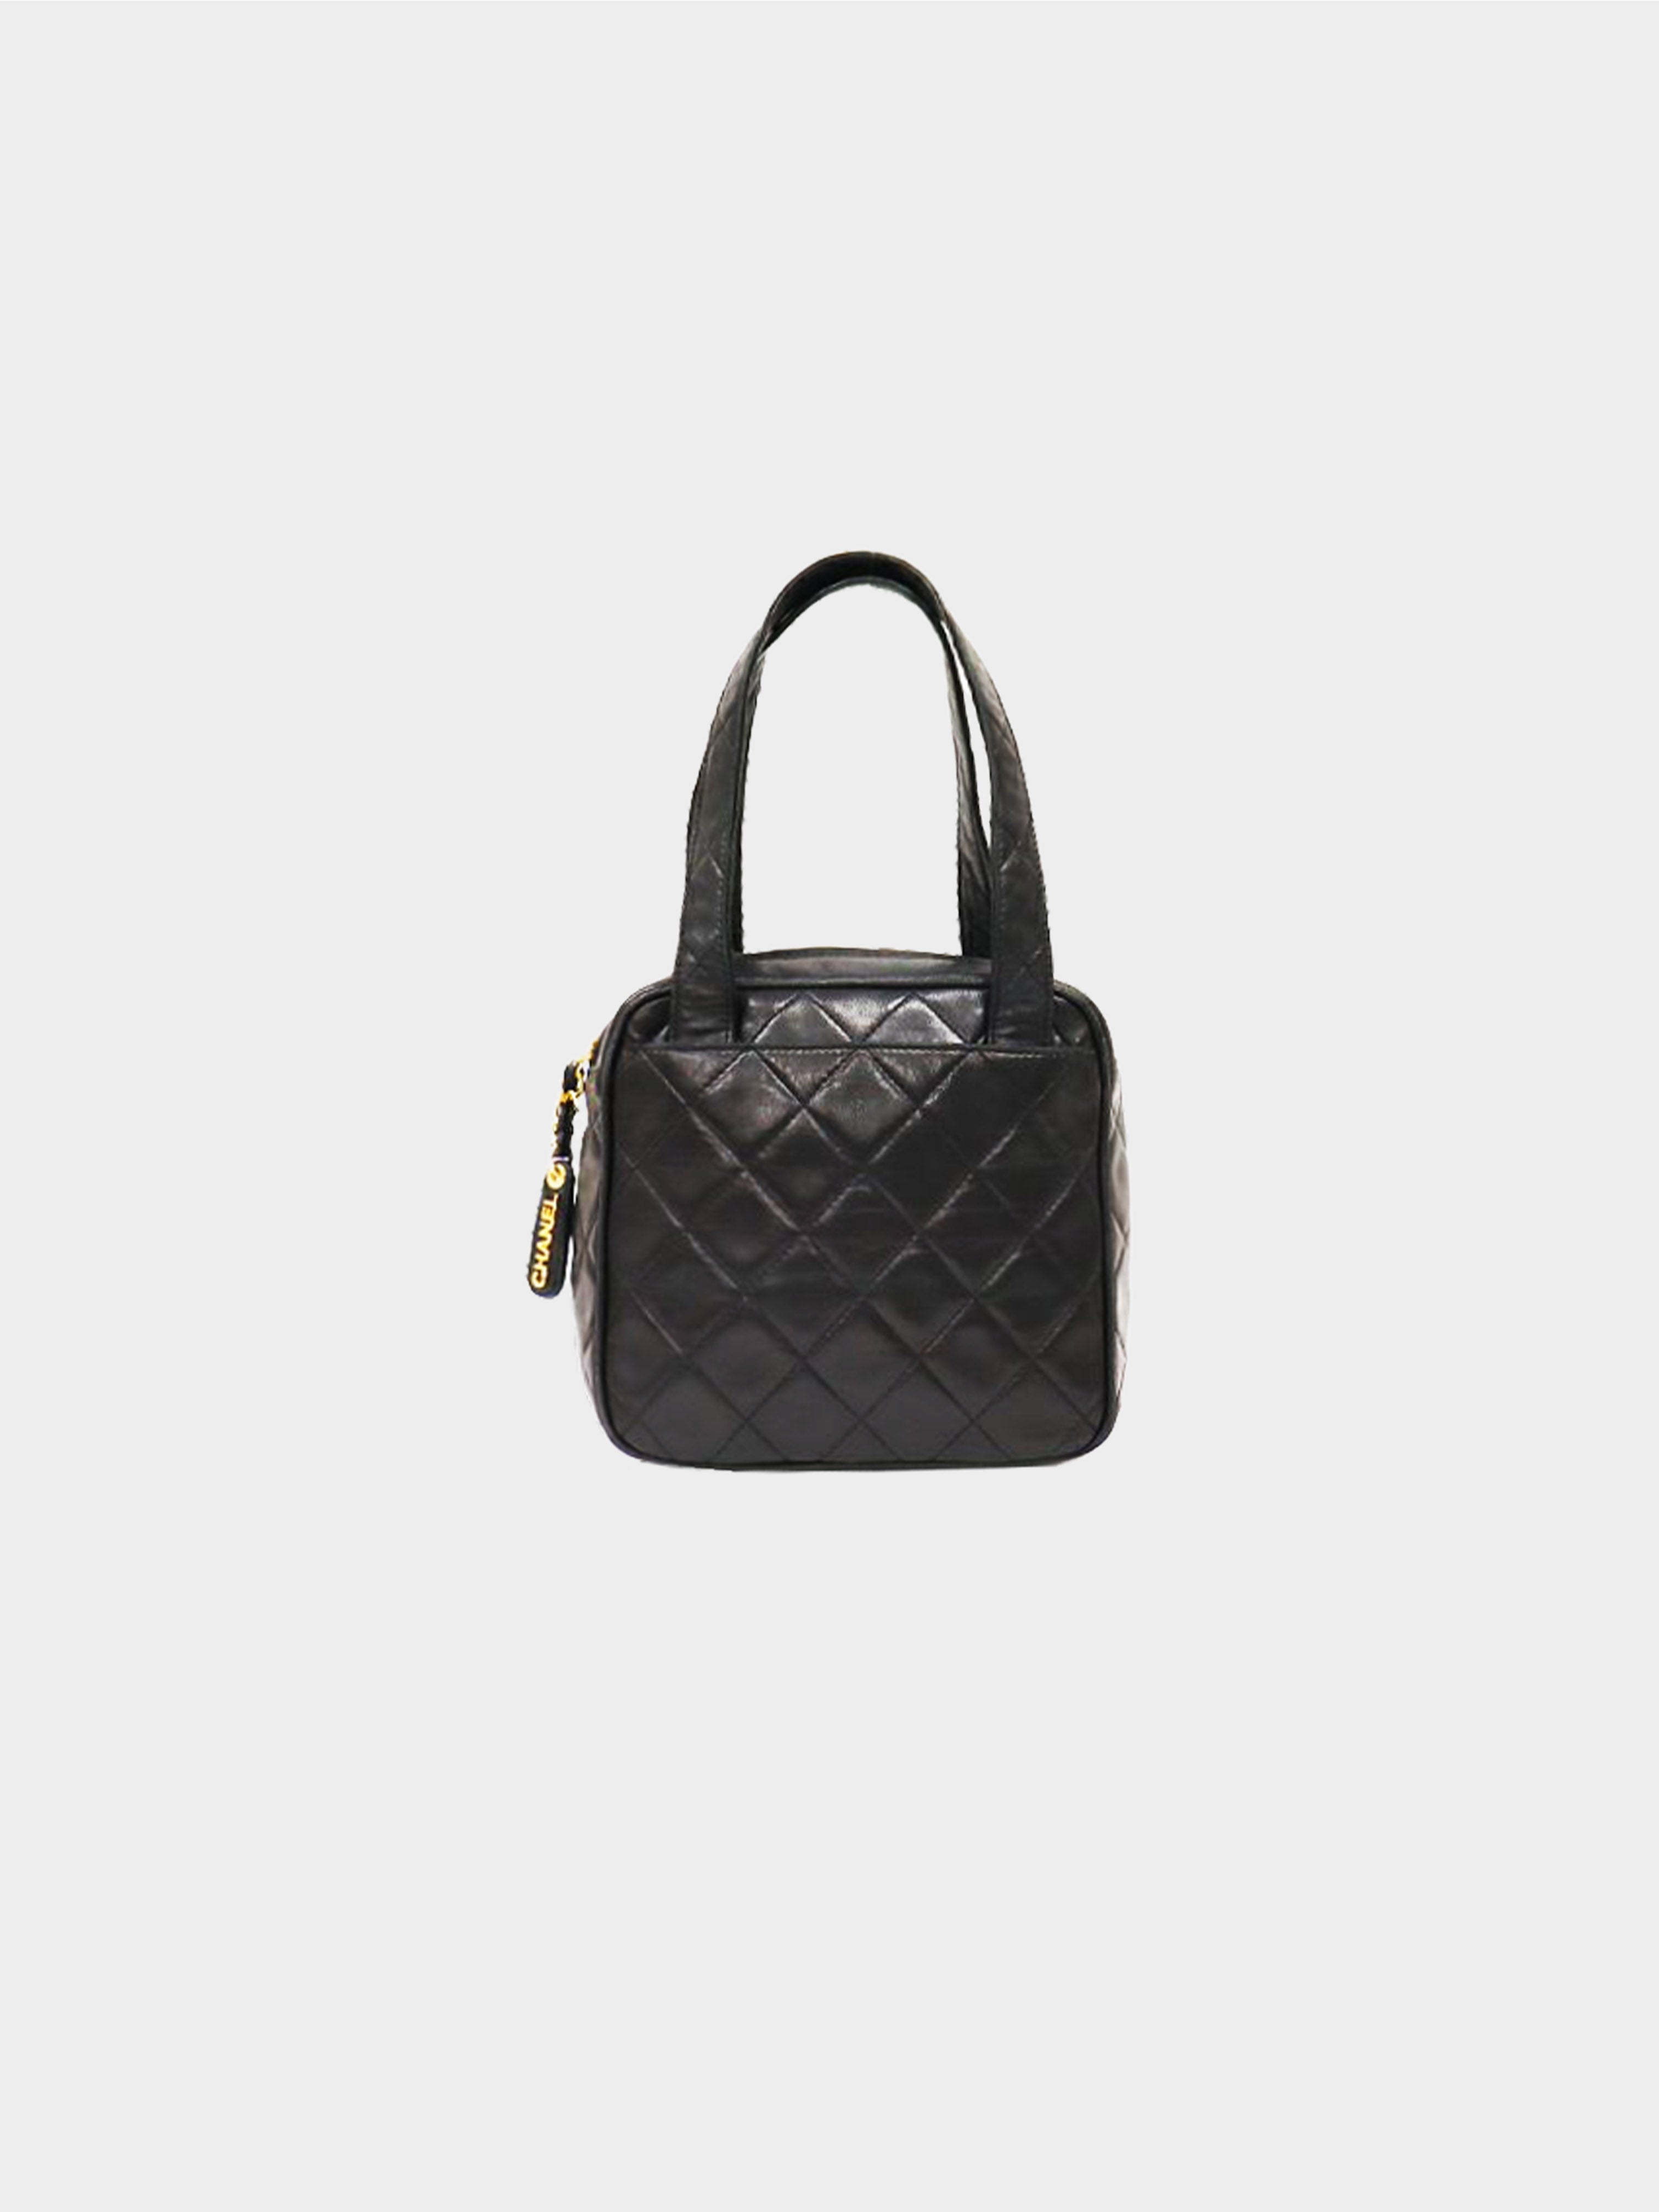 Chanel 1980s Paris Matelasse Turn Lock Chain Shoulder Bag · INTO